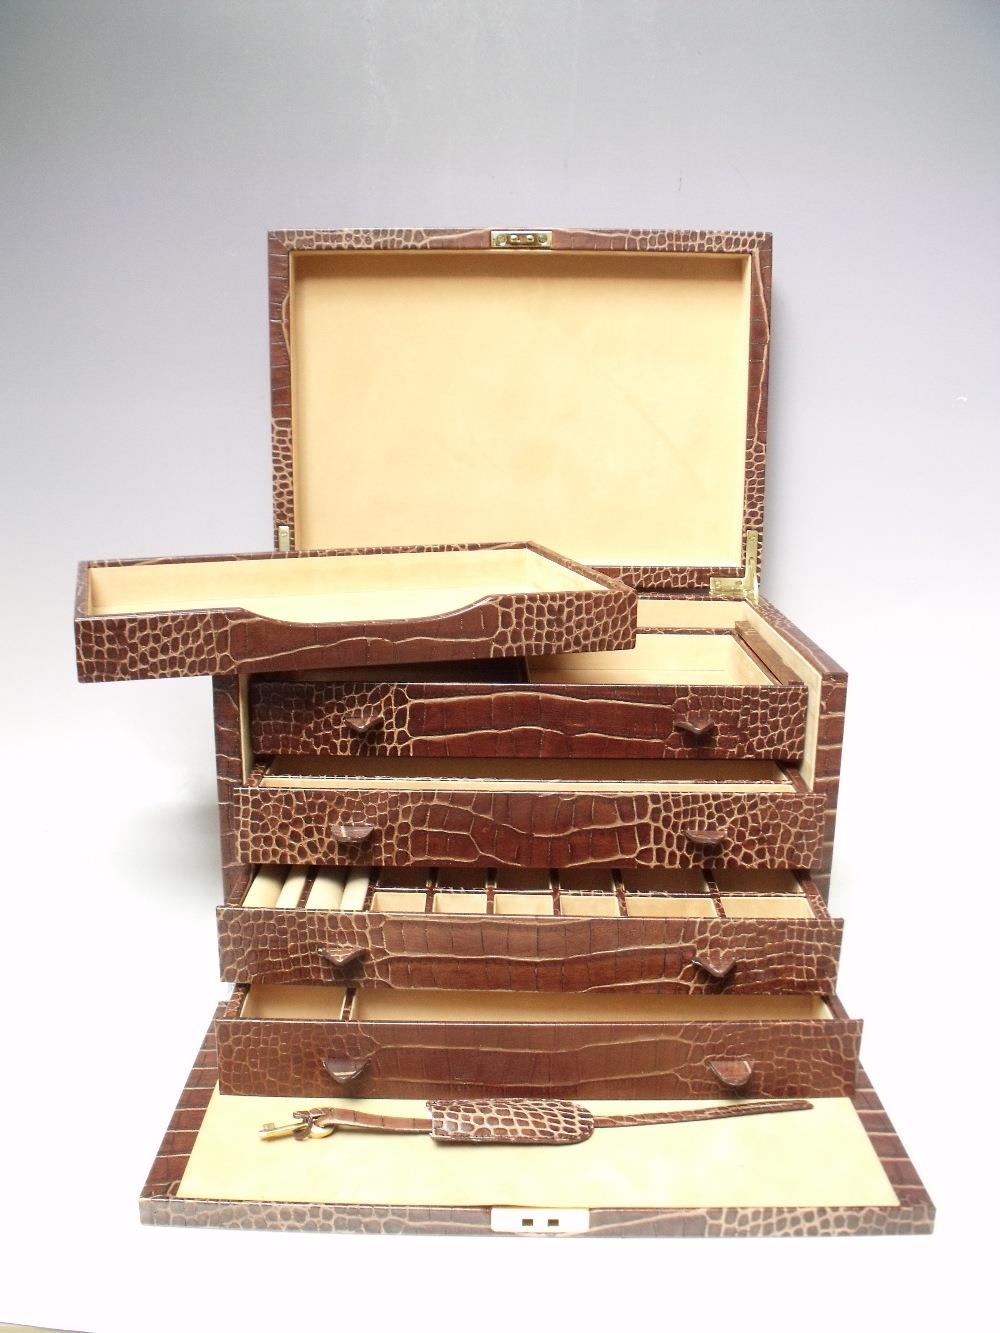 Smythson Mara Croc-effect Leather Jewelry Box - Navy